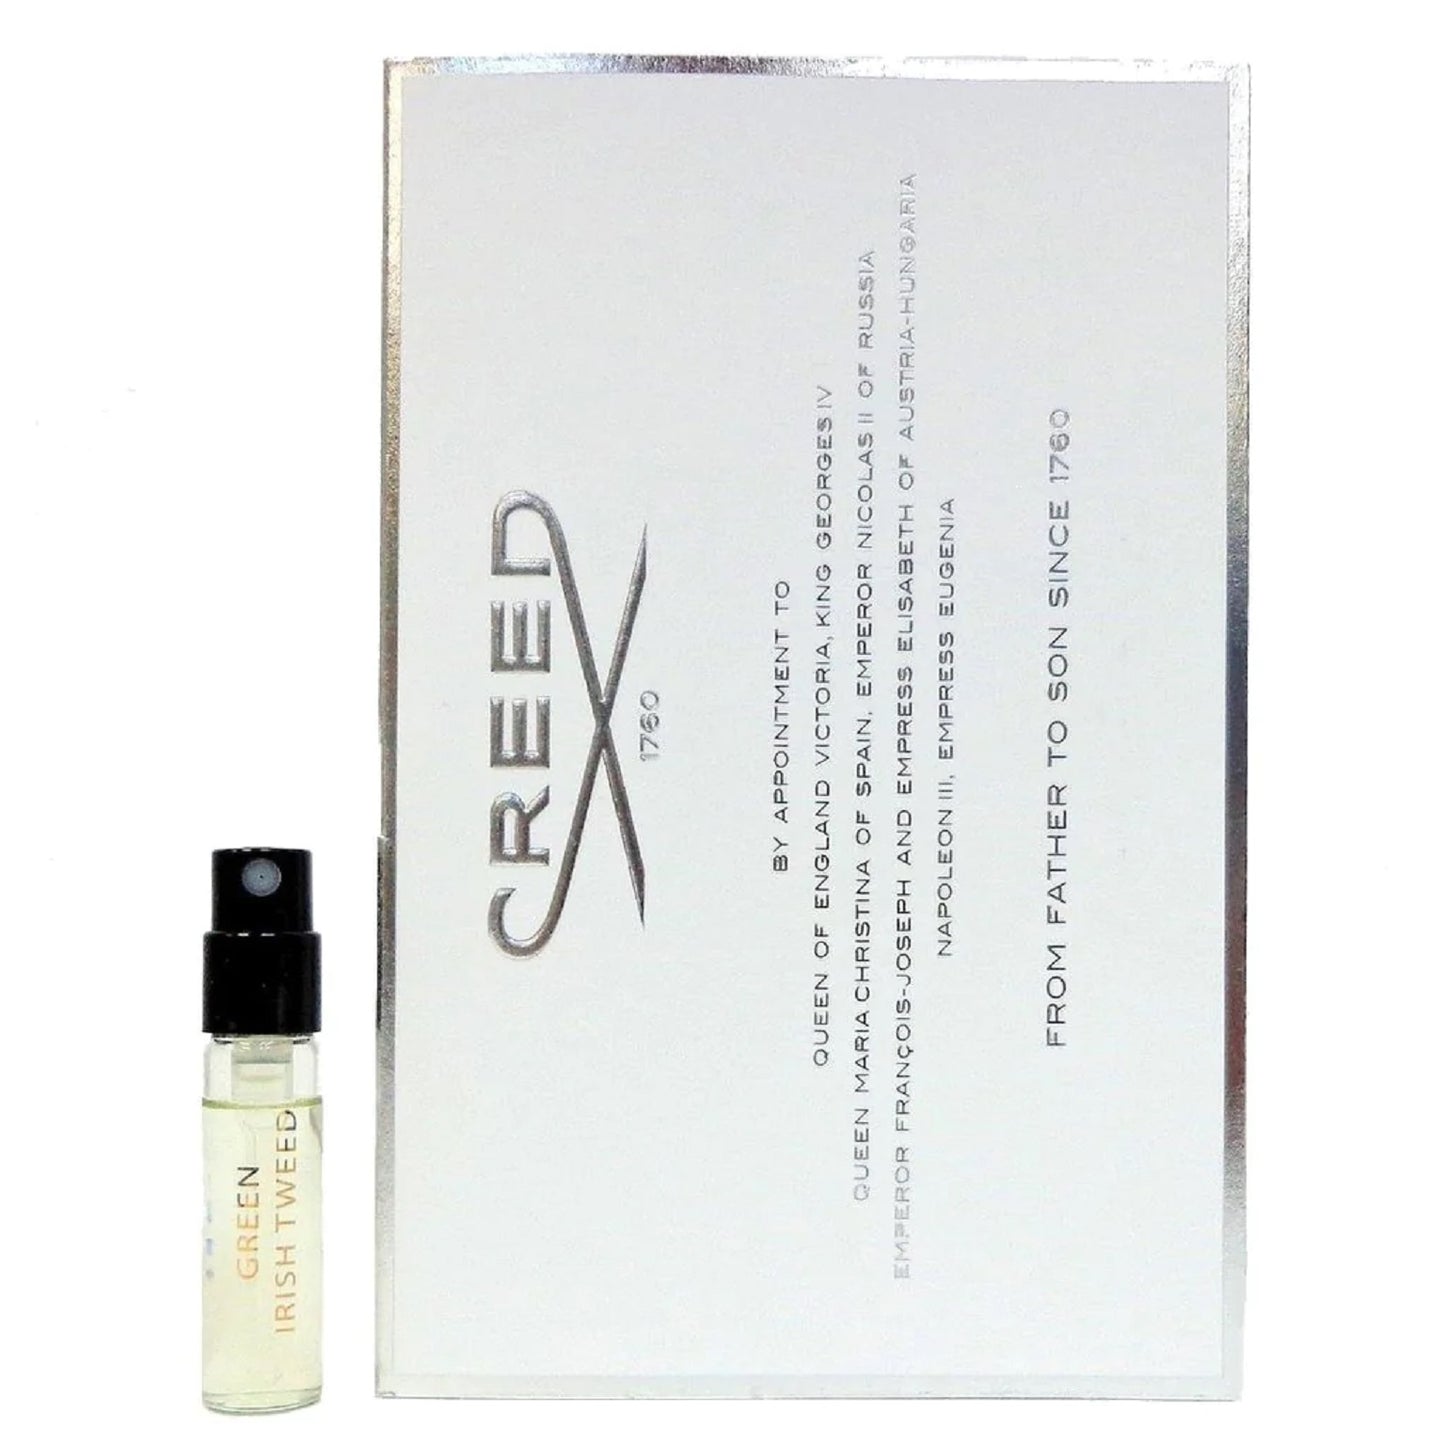 Creed Green Irish Tweed edp 2.5ml échantillon de parfum officiel